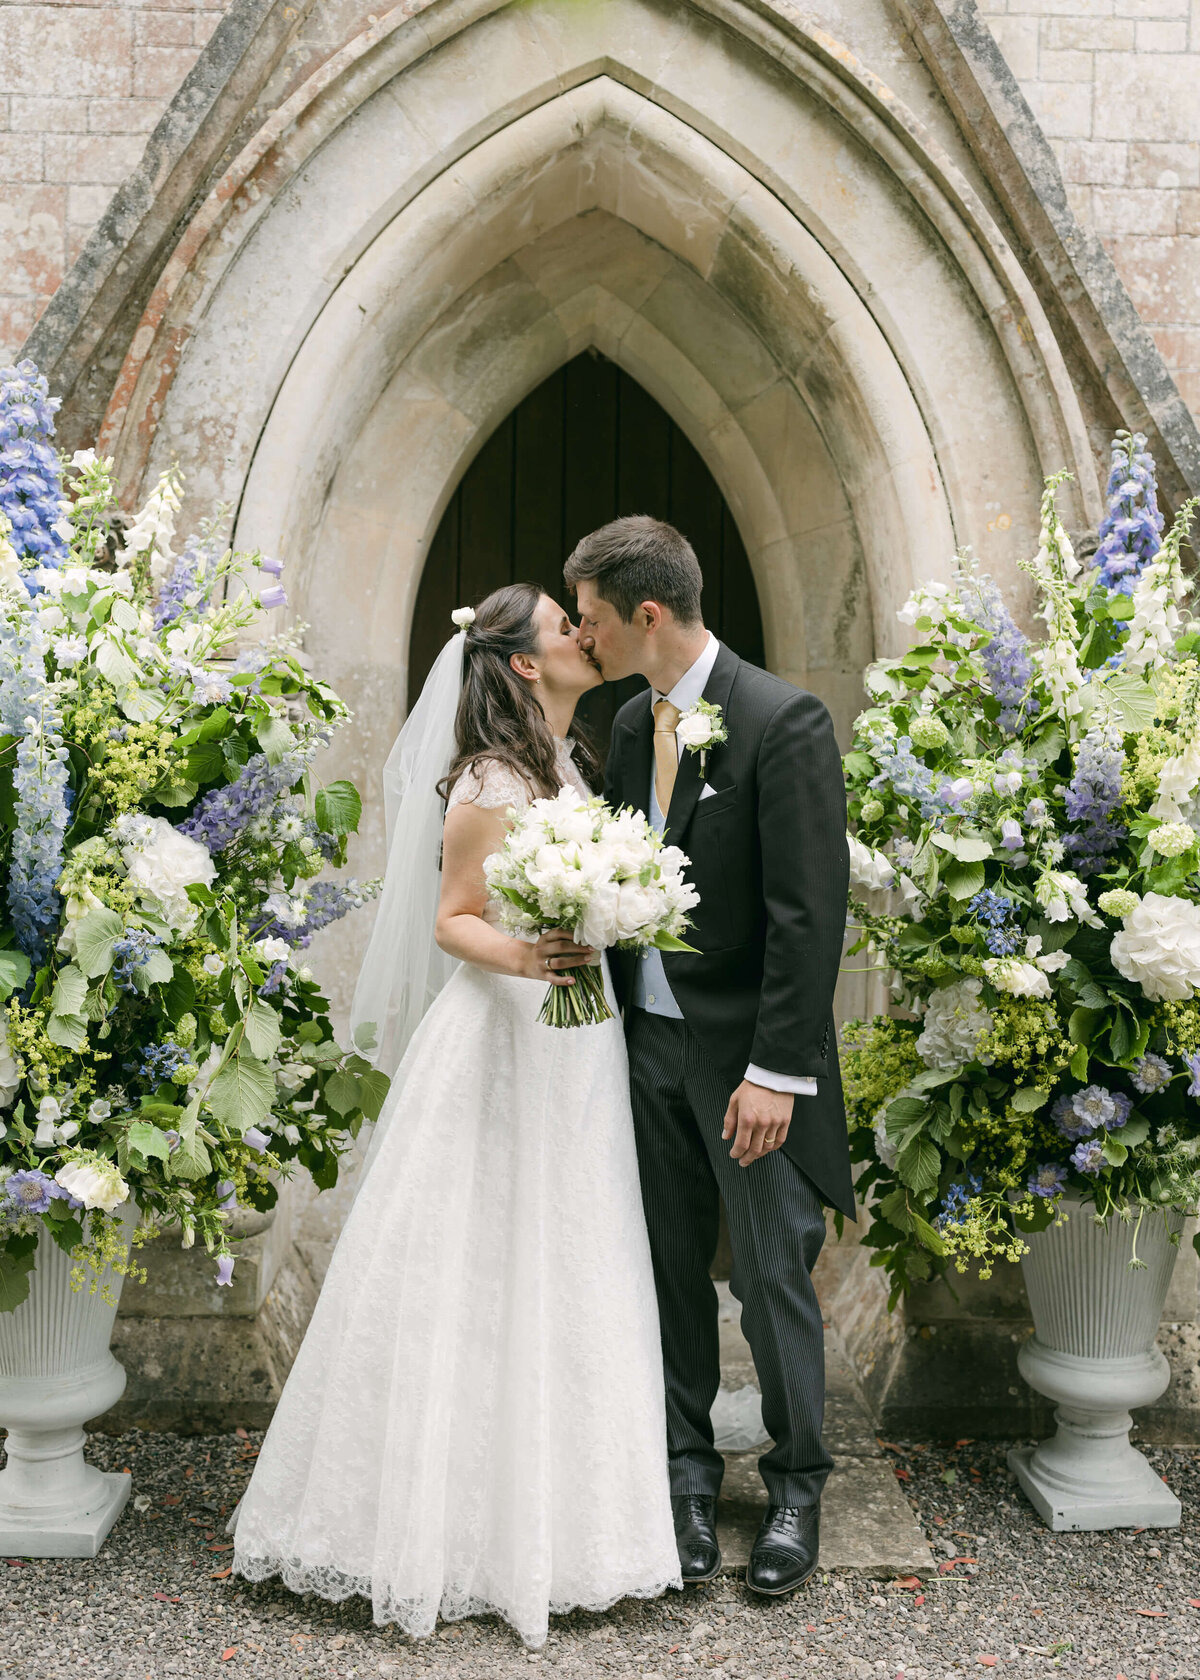 chloe-winstanley-weddings-wiltshire-couple-kiss-church-flower-urns